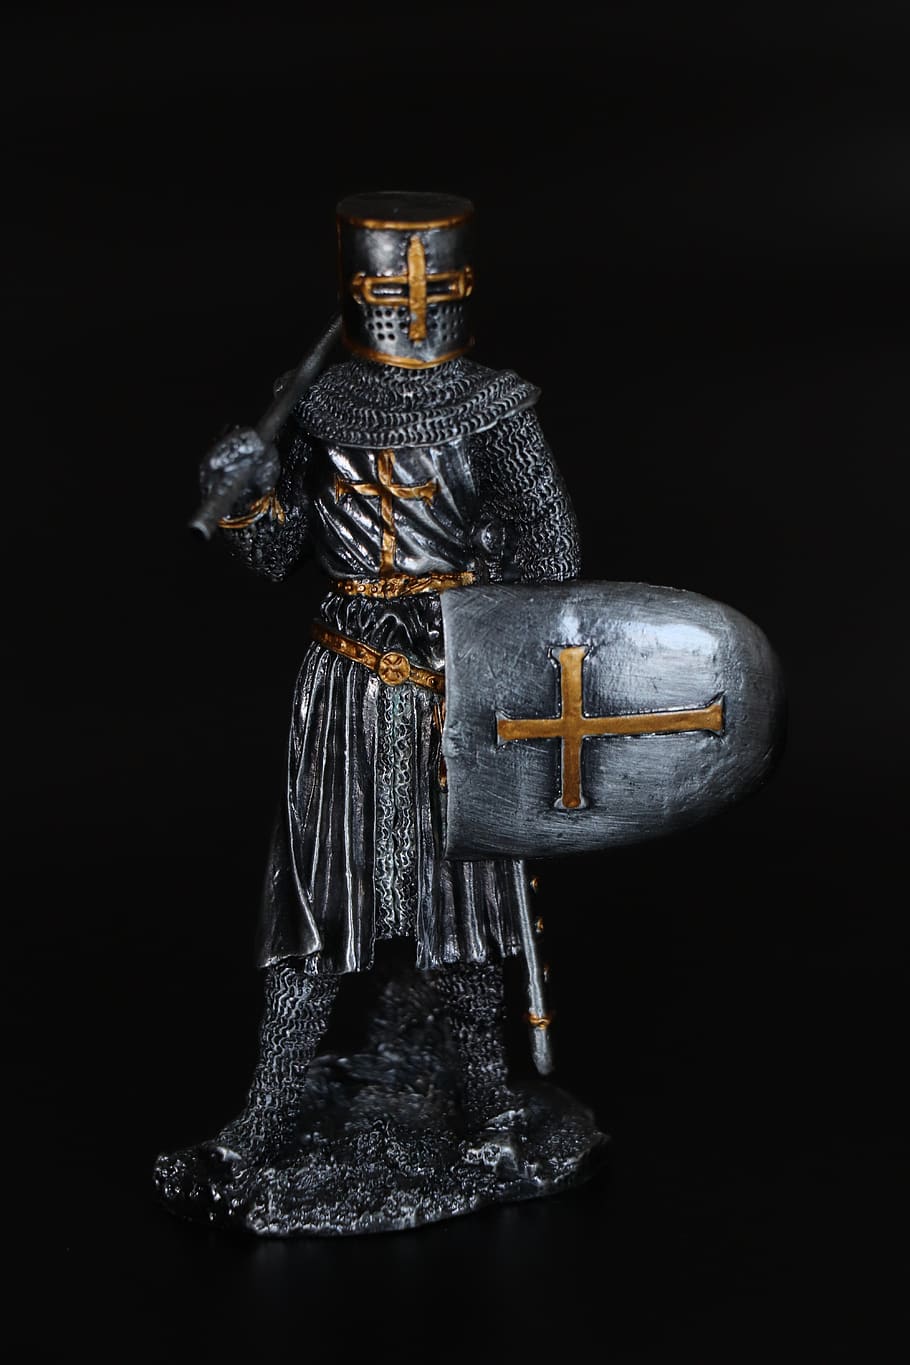 oblivion shield of the crusader